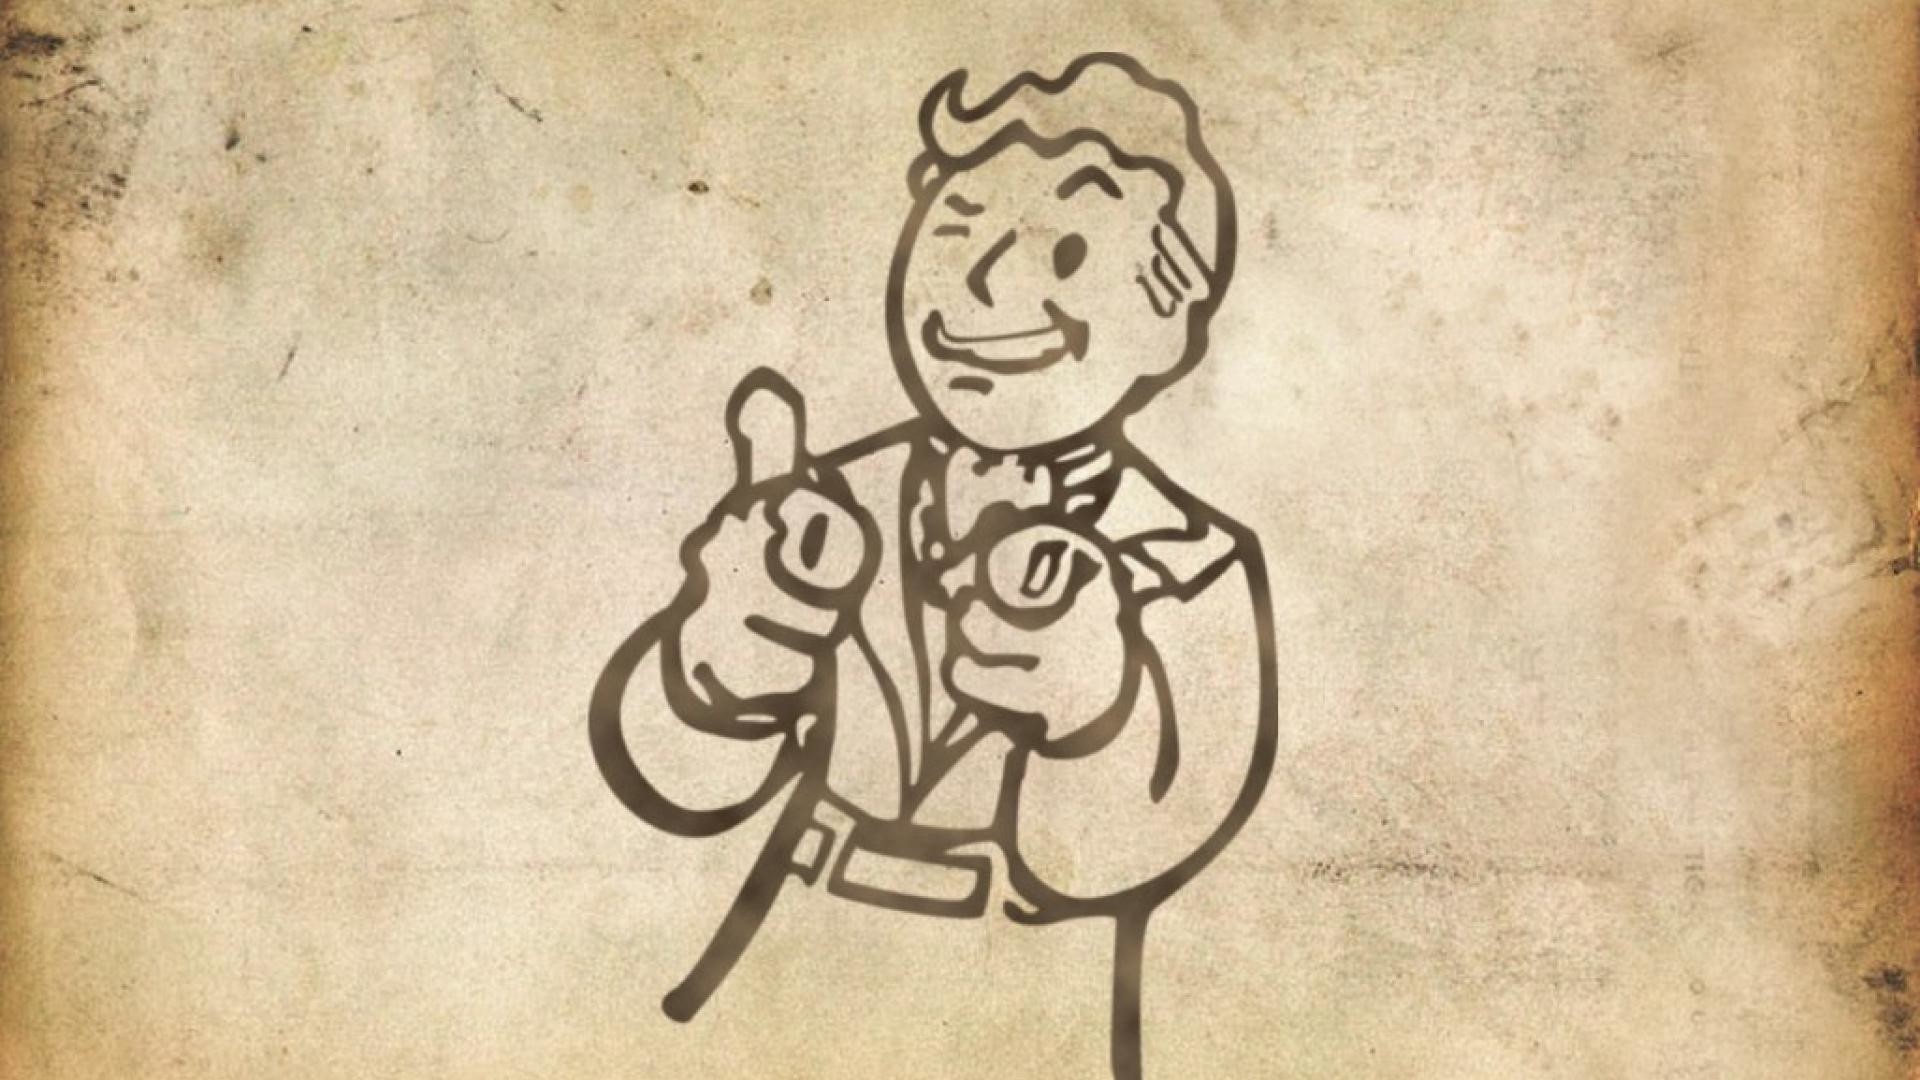 1920x1080 Similiar <b>Pip Boy Fallout 3</b> Concept Art Keywords